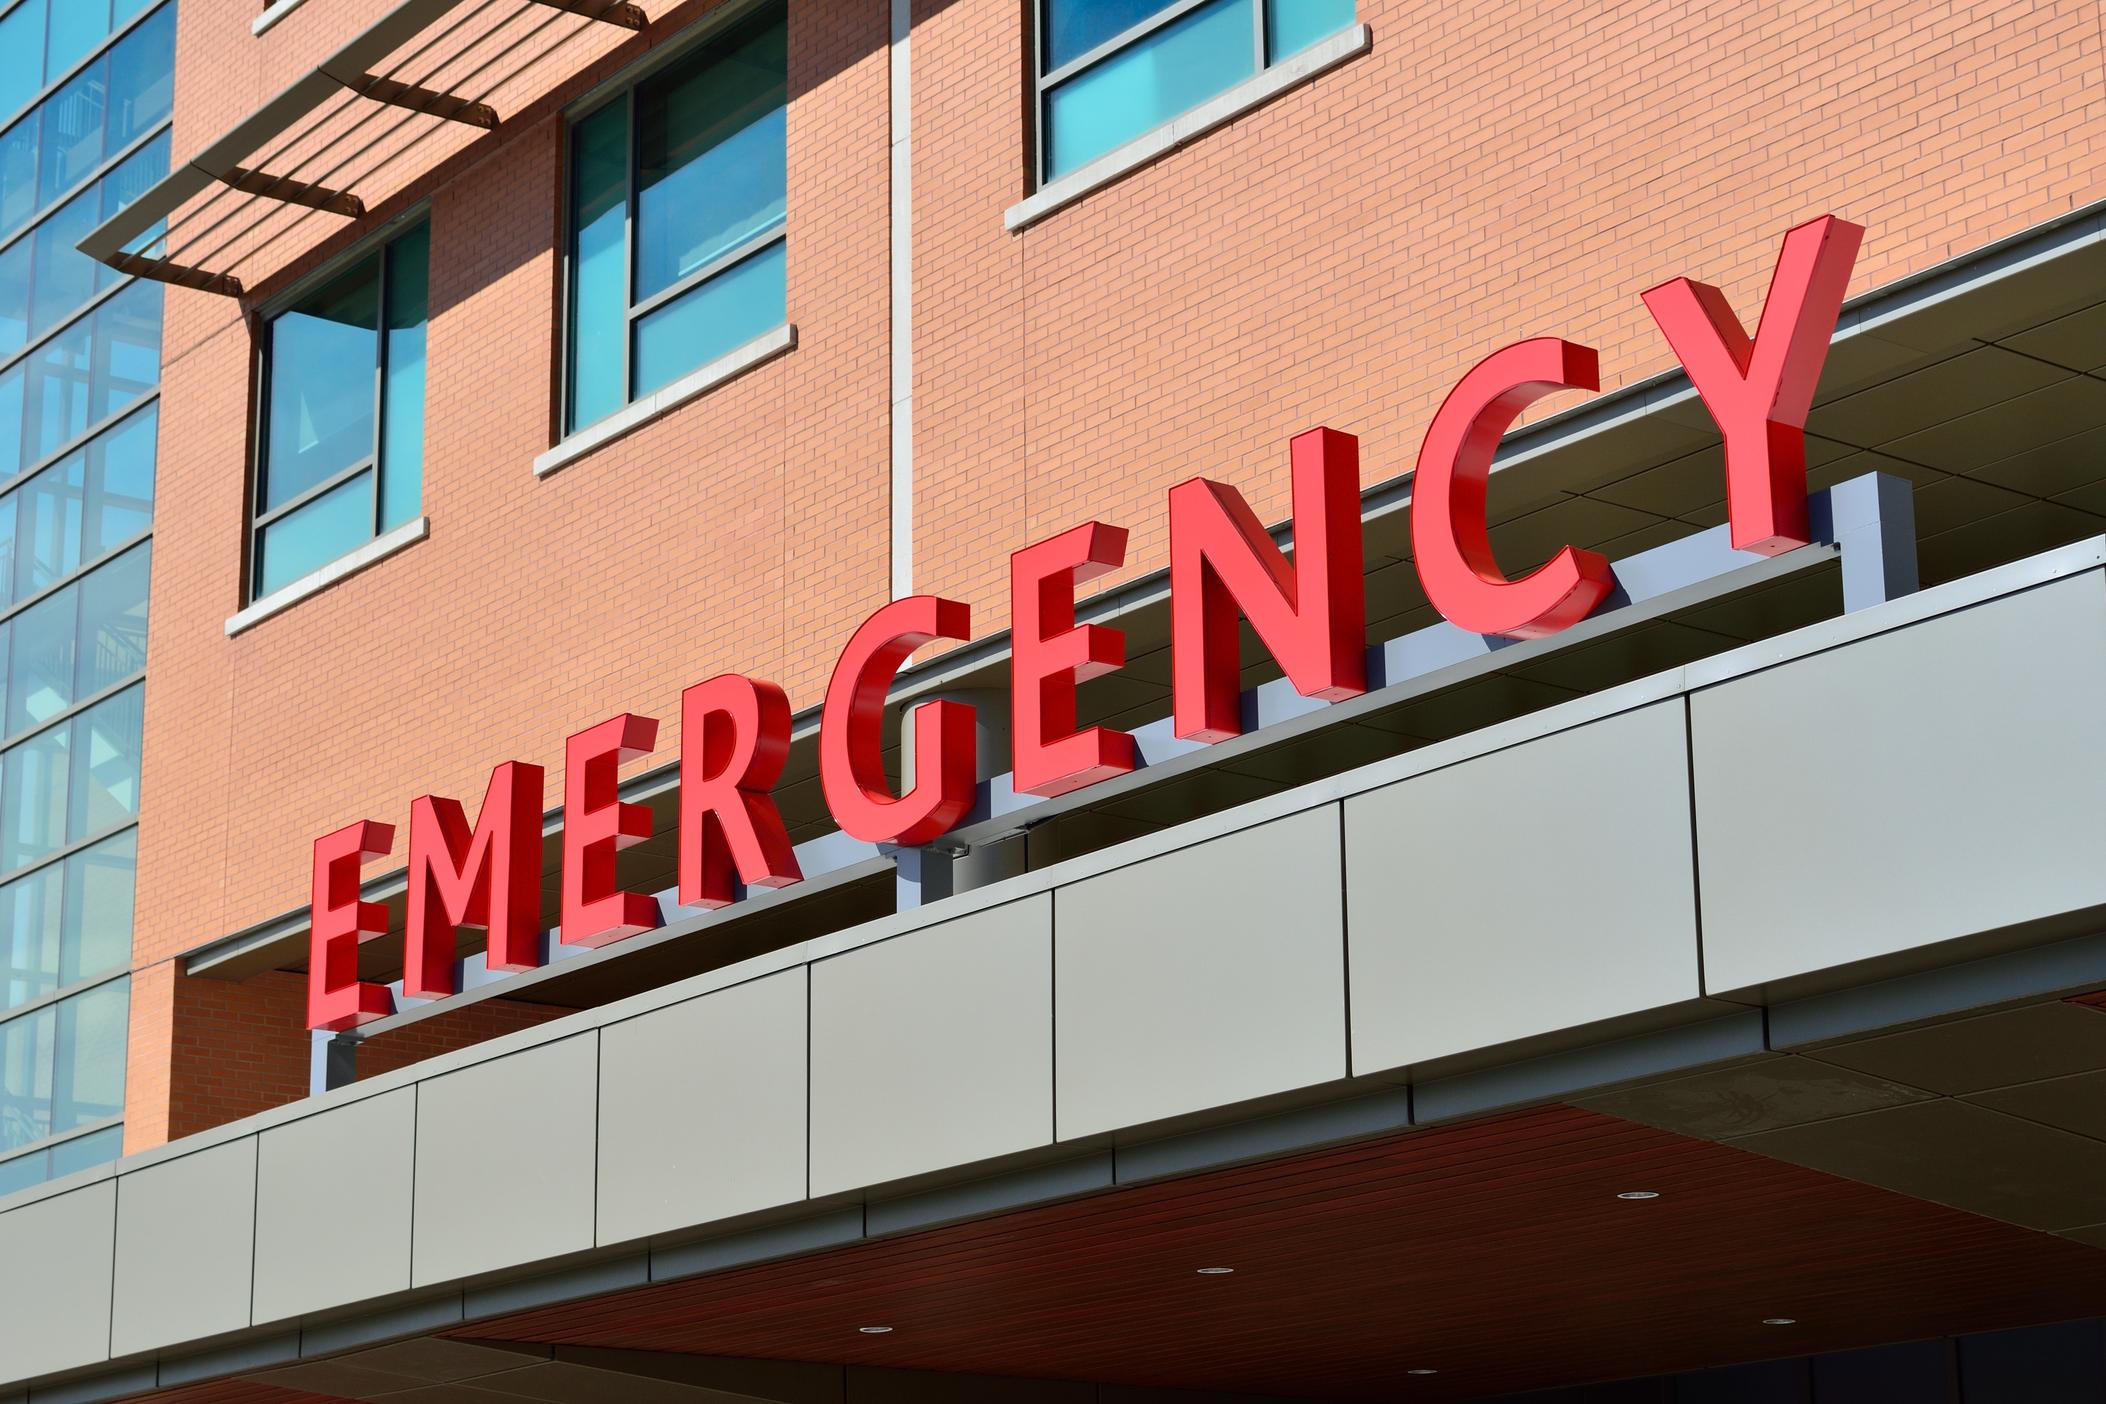 A hospital emergency room sign